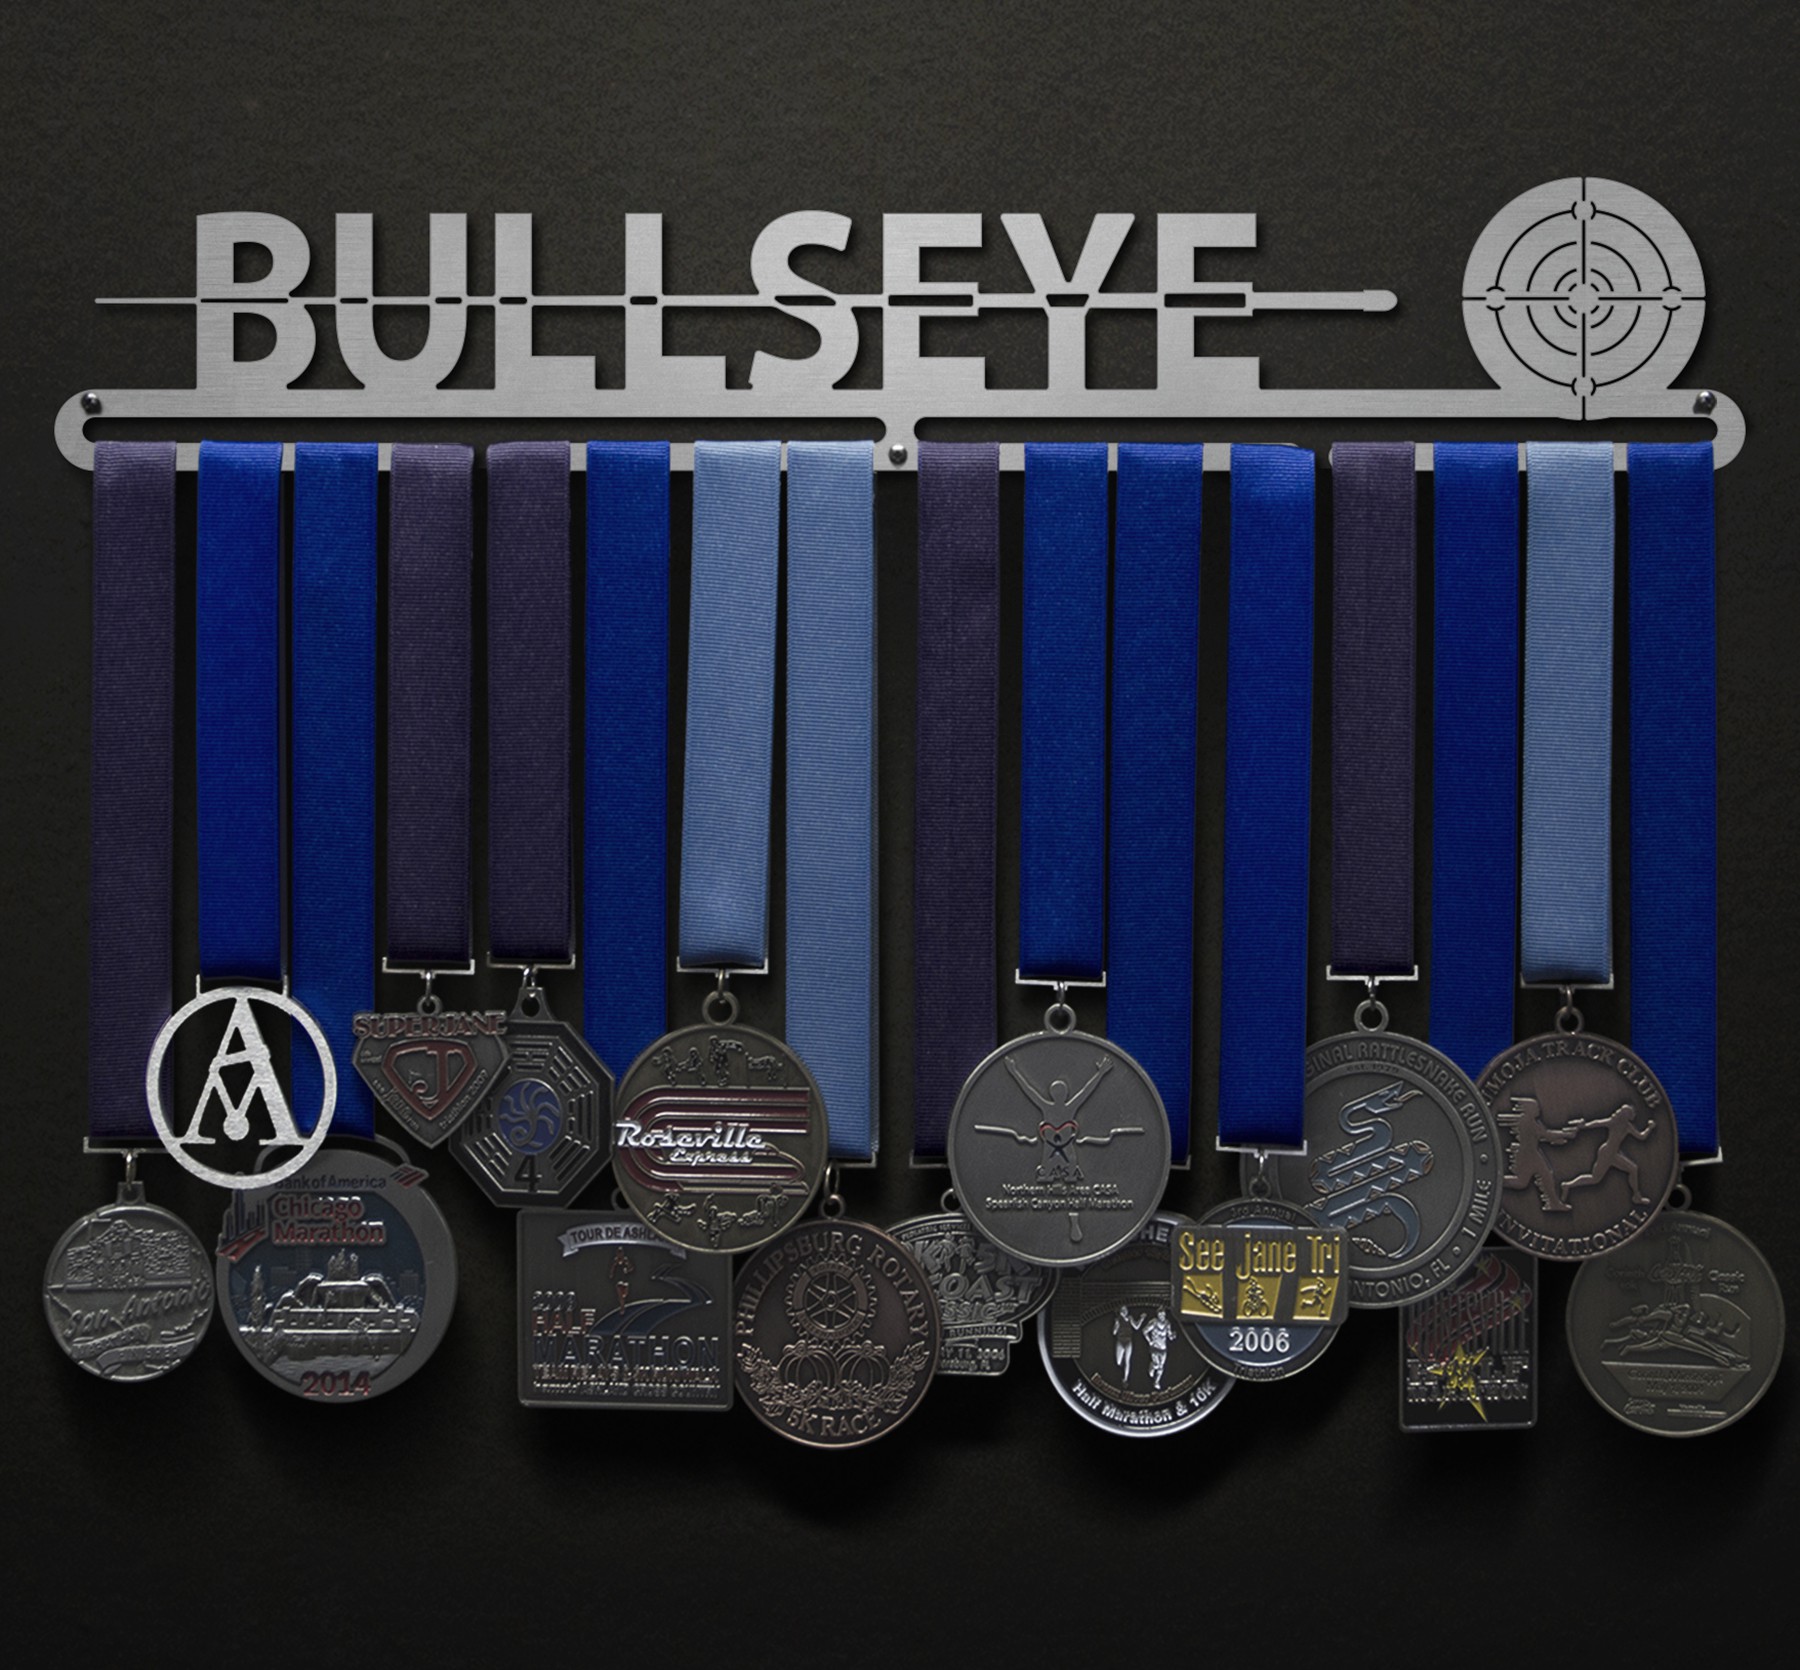 Bullseye | Sport & Running Medal Displays | The Original Stainless